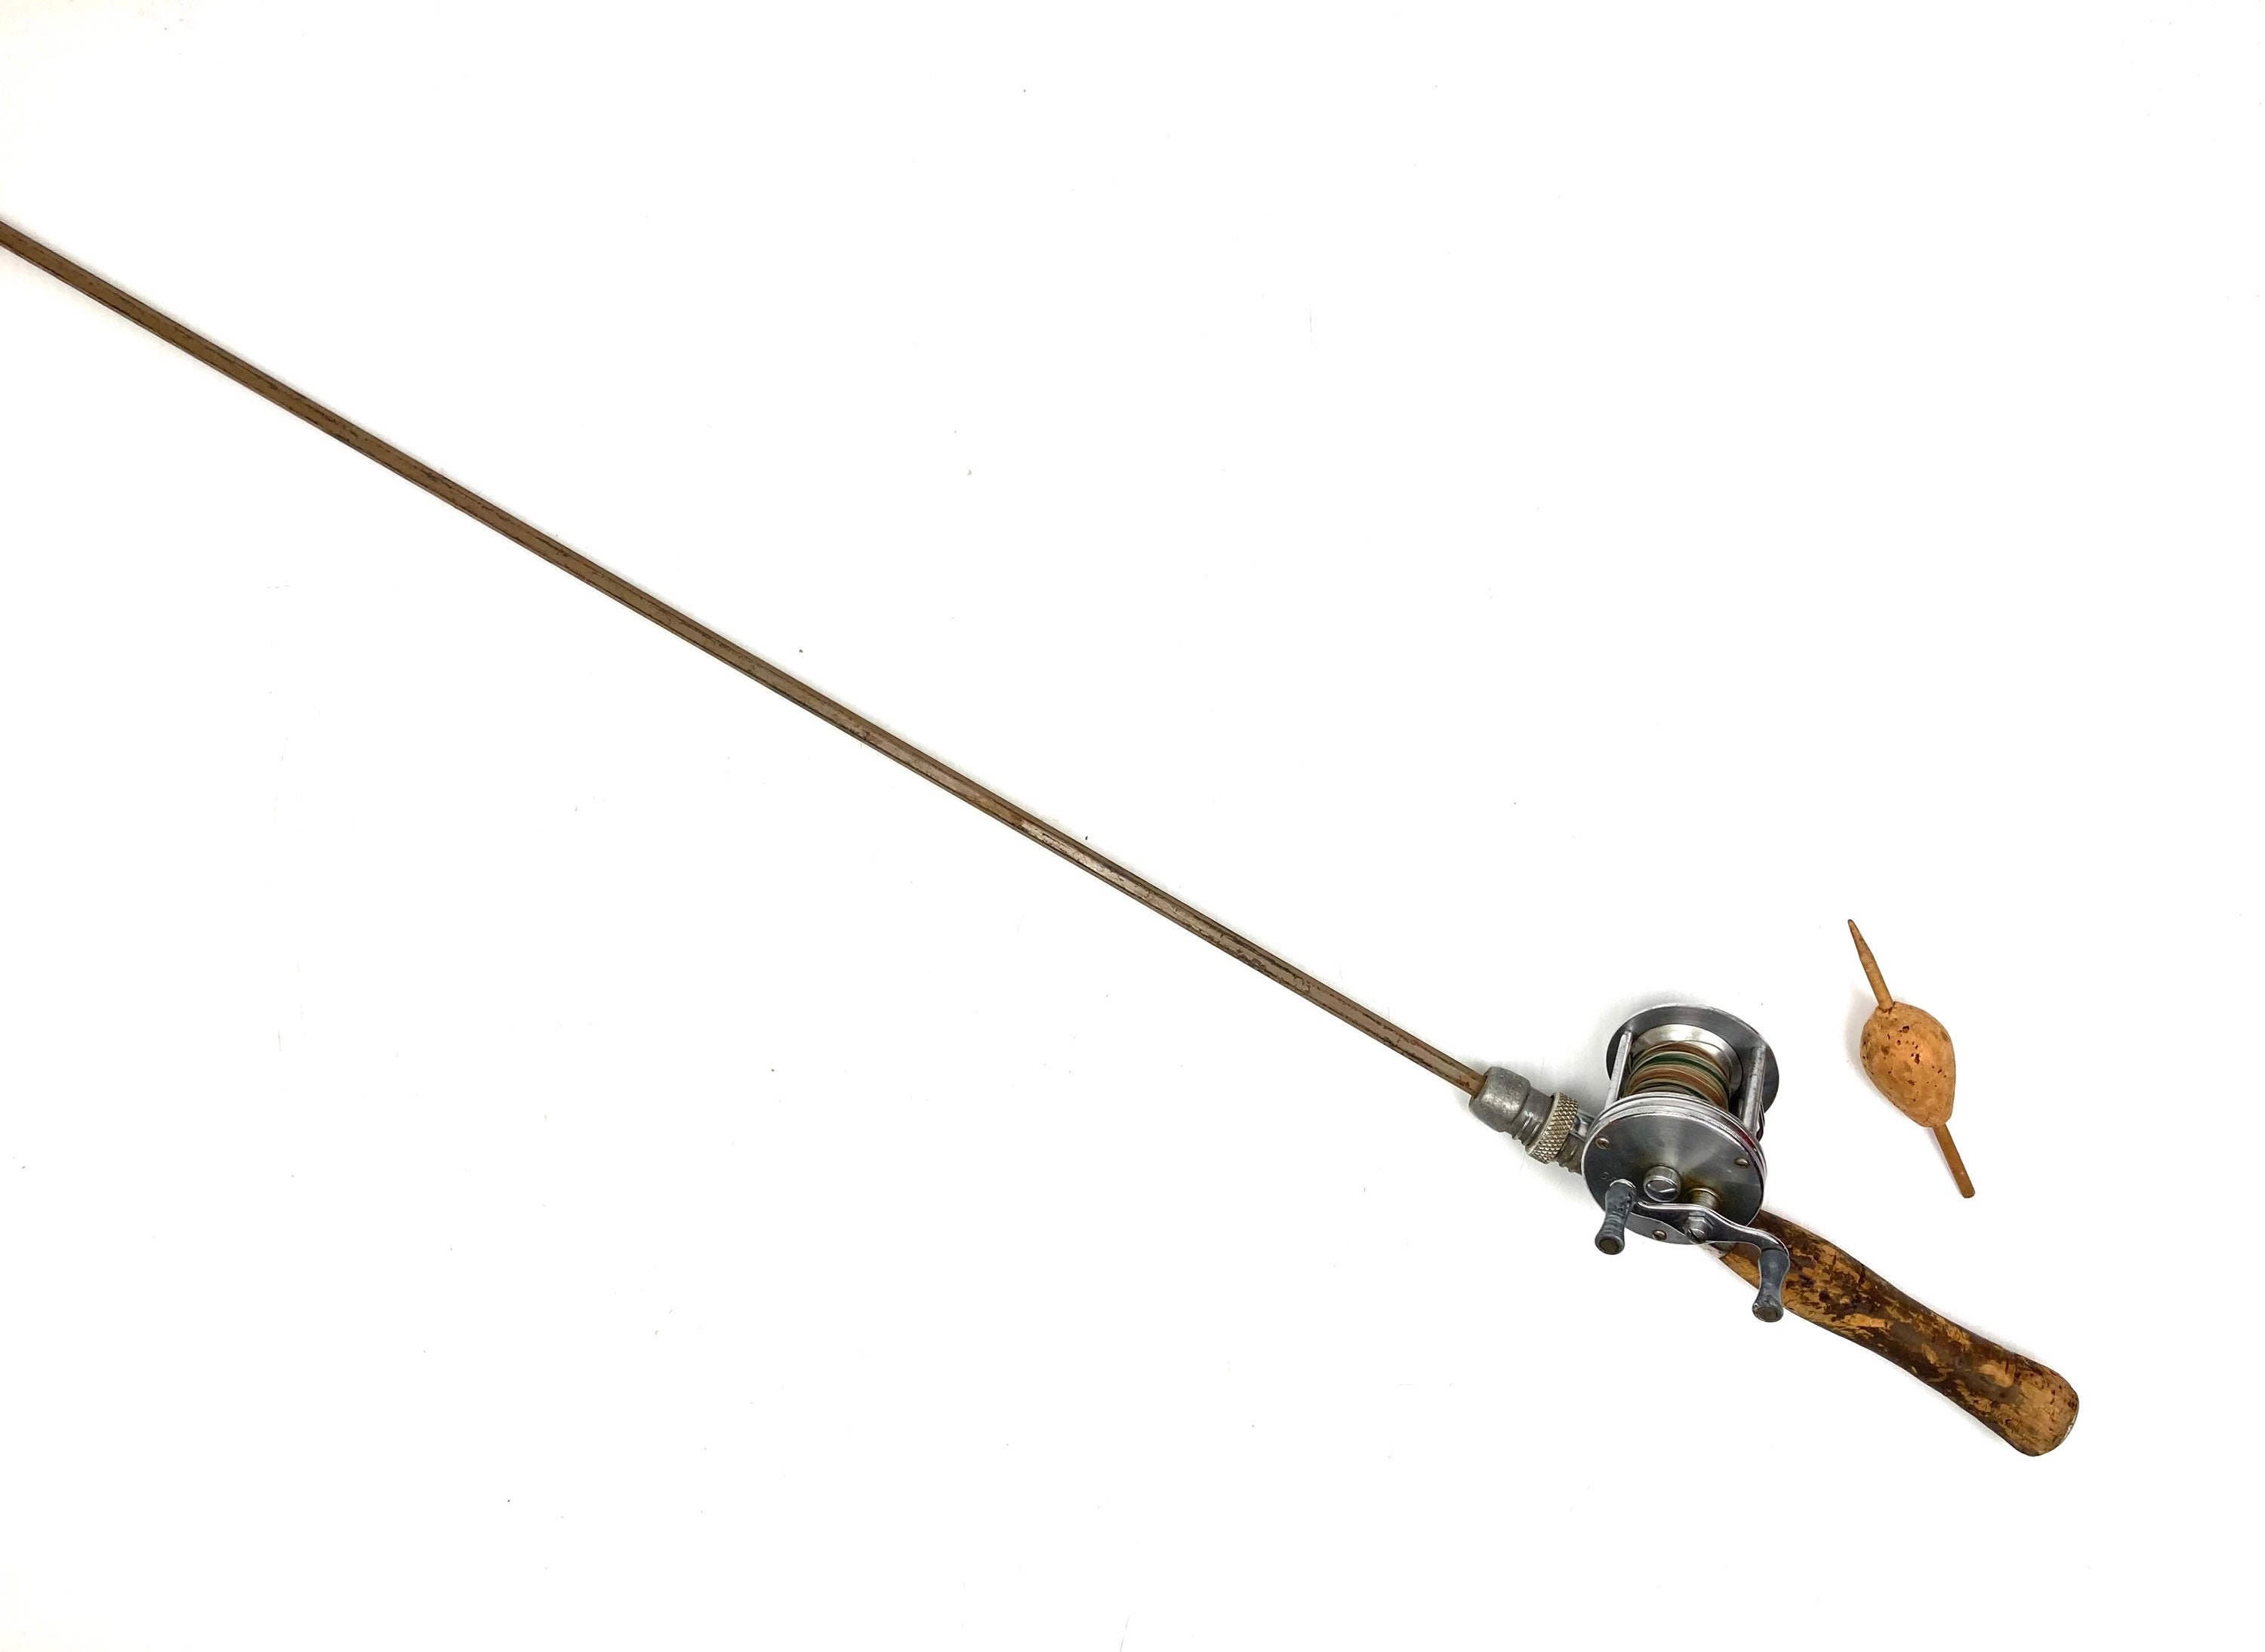 Antique Metal Fishing Rod Bristol Telescoping Steel Fishing Pole